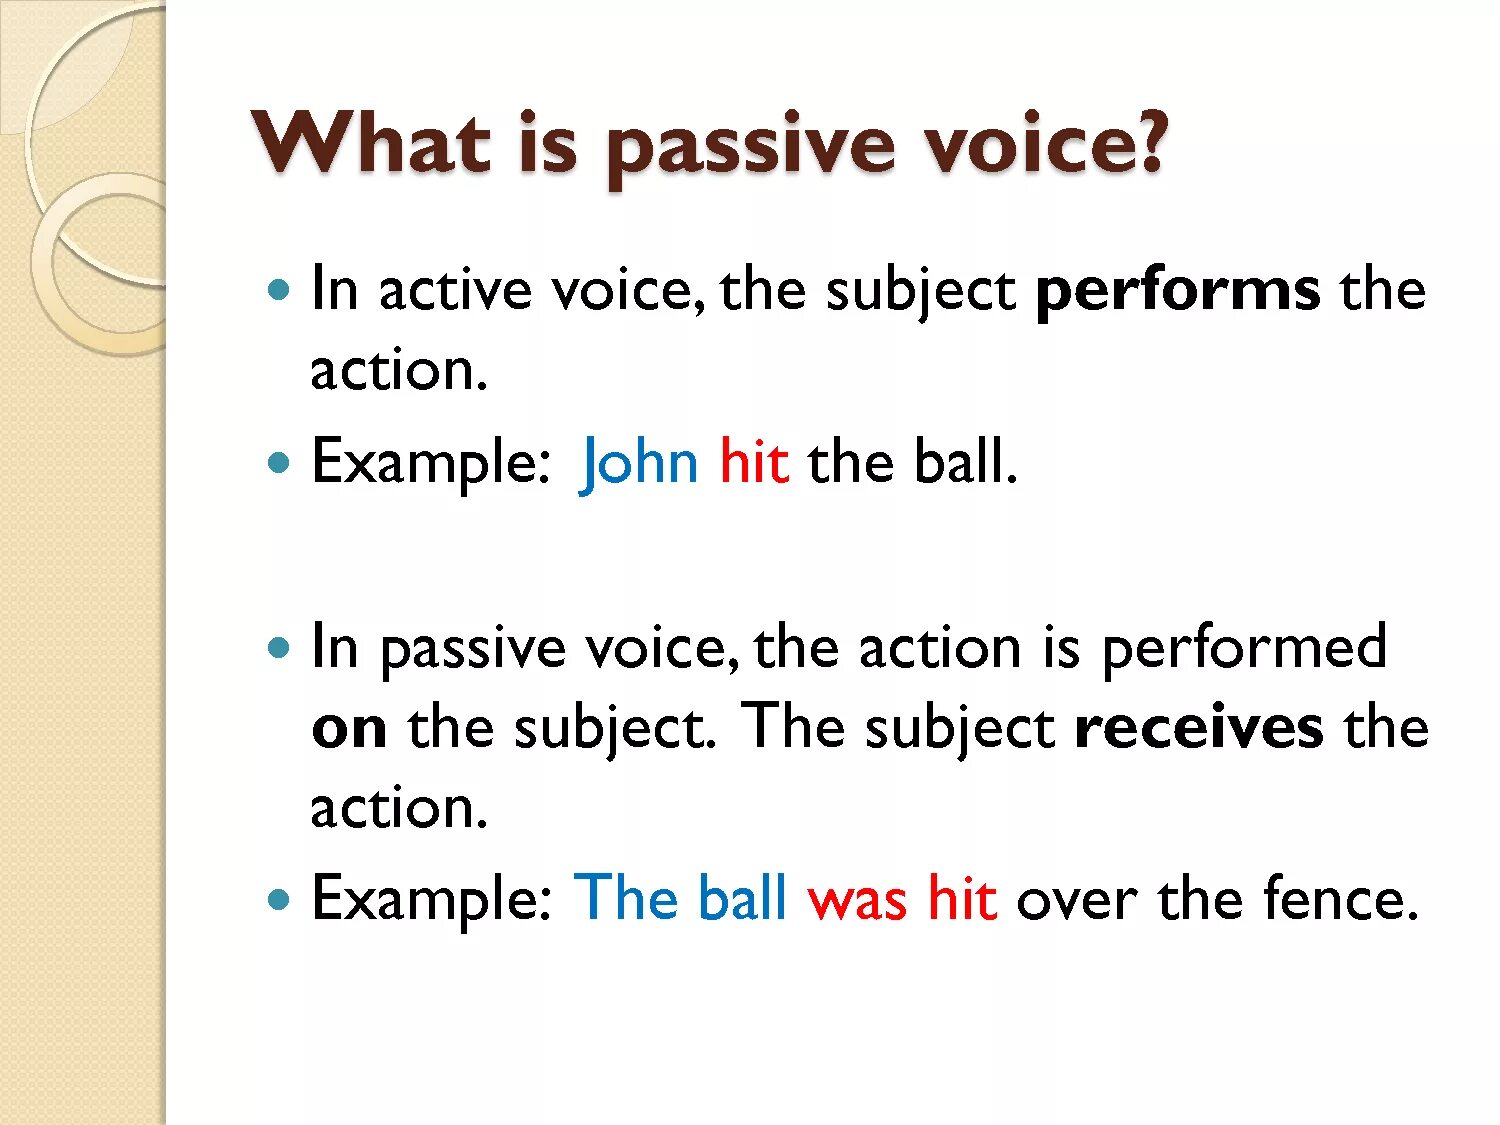 Passive Voice. Active and Passive Voice. What is Passive Voice. Active Voice and Passive Voice. Films passive voice